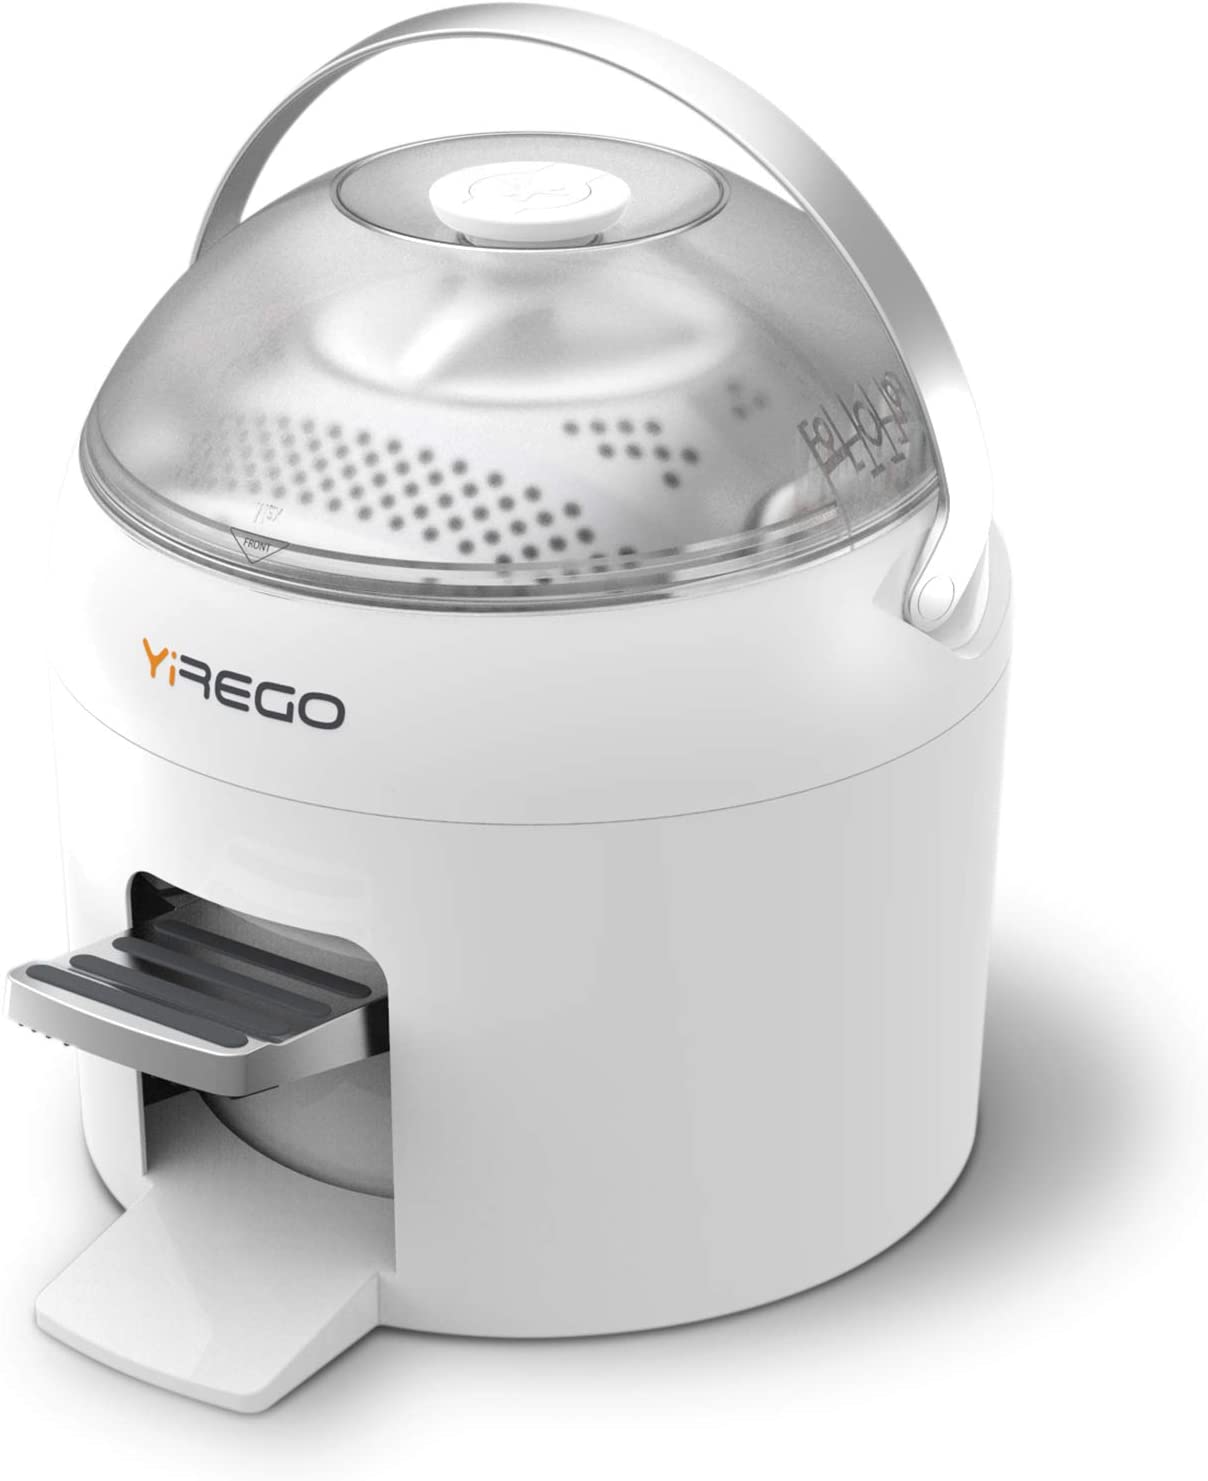 yirego drumi portable washing machine